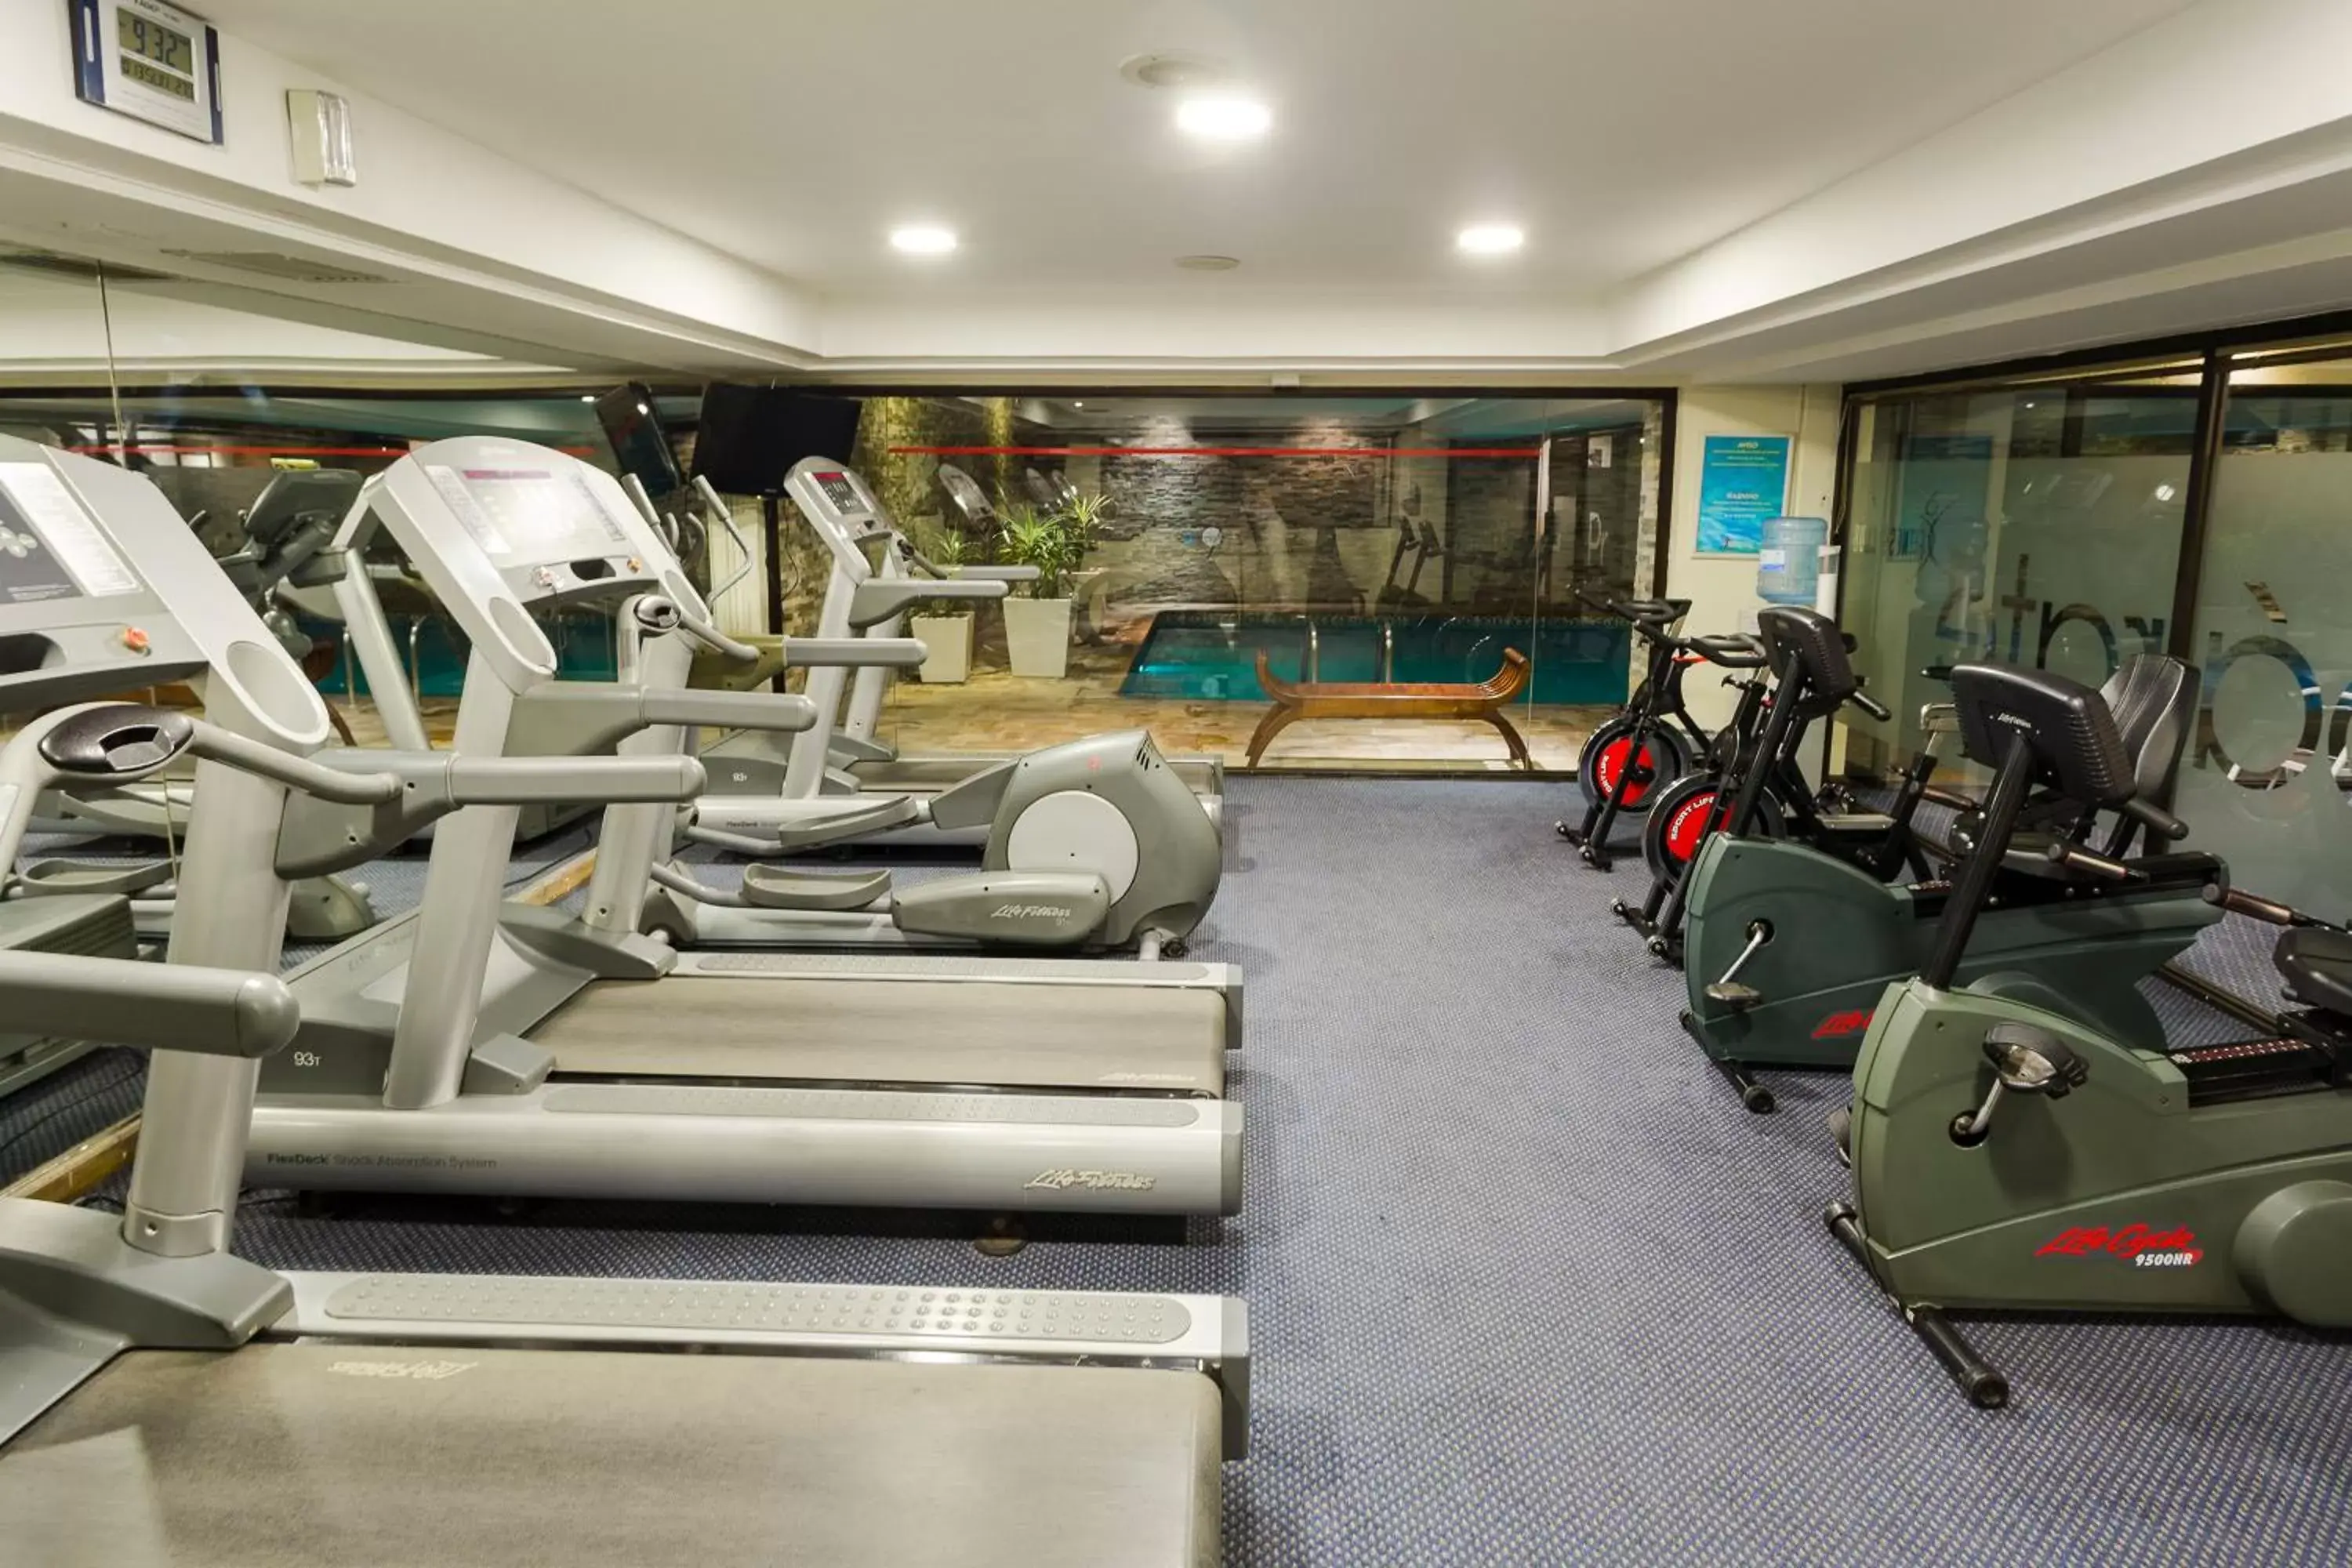 Fitness centre/facilities, Fitness Center/Facilities in Hotel Plaza San Francisco